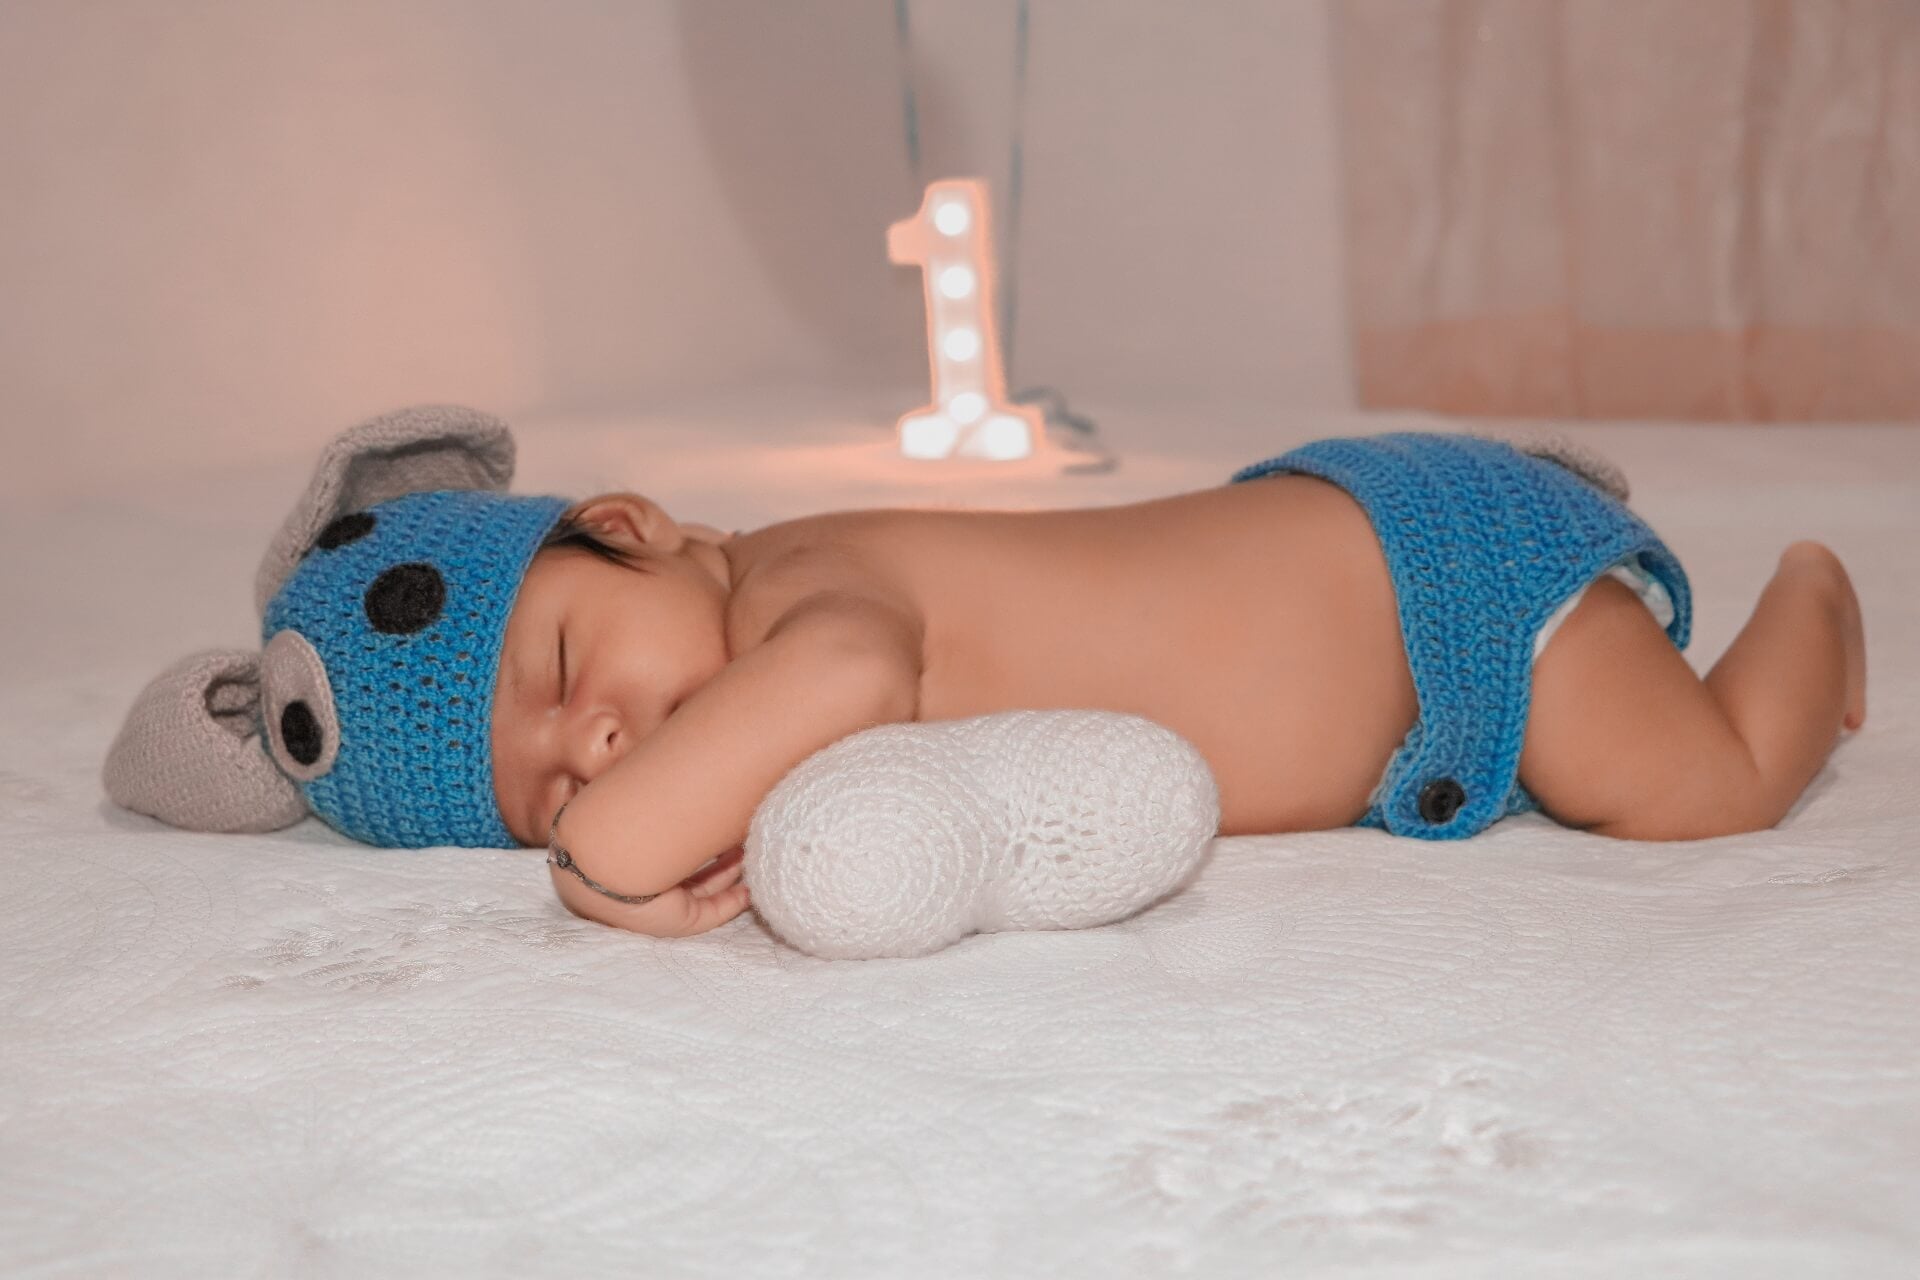 What foods facilitate children's sleep?